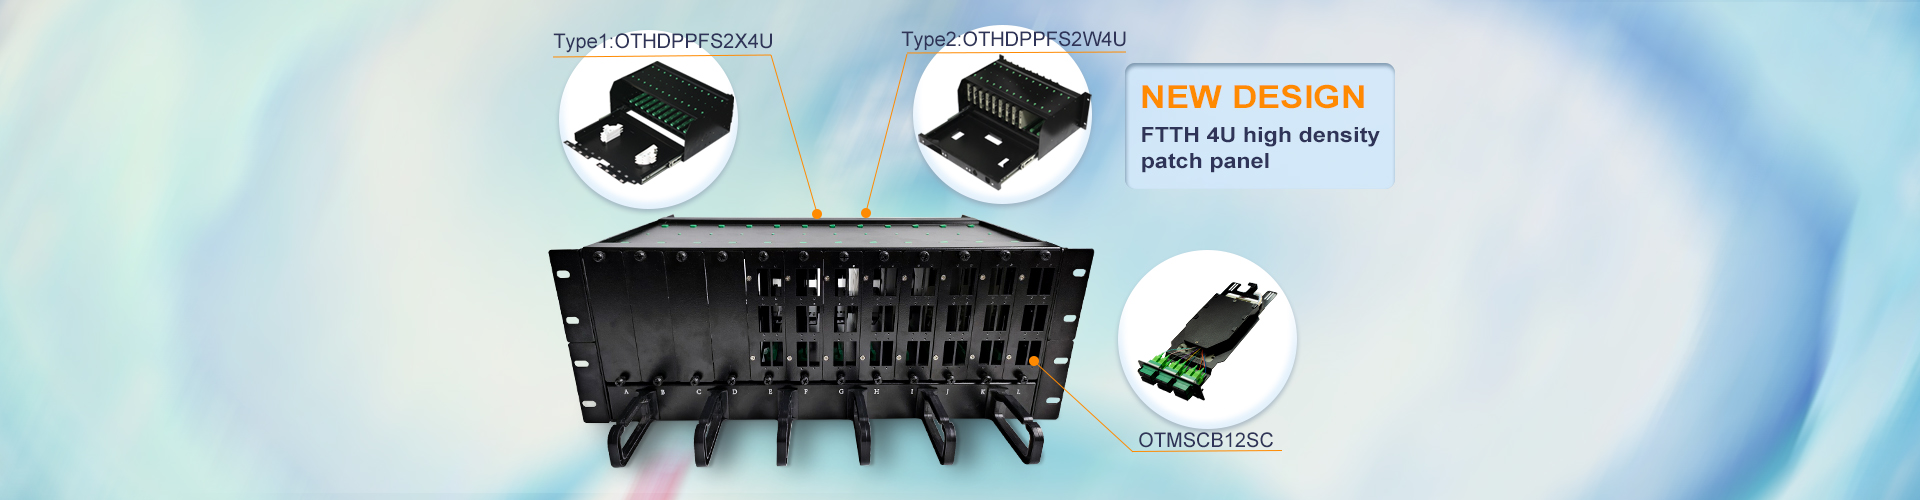 New-design-FTTH-4U-high-density-patch-panel